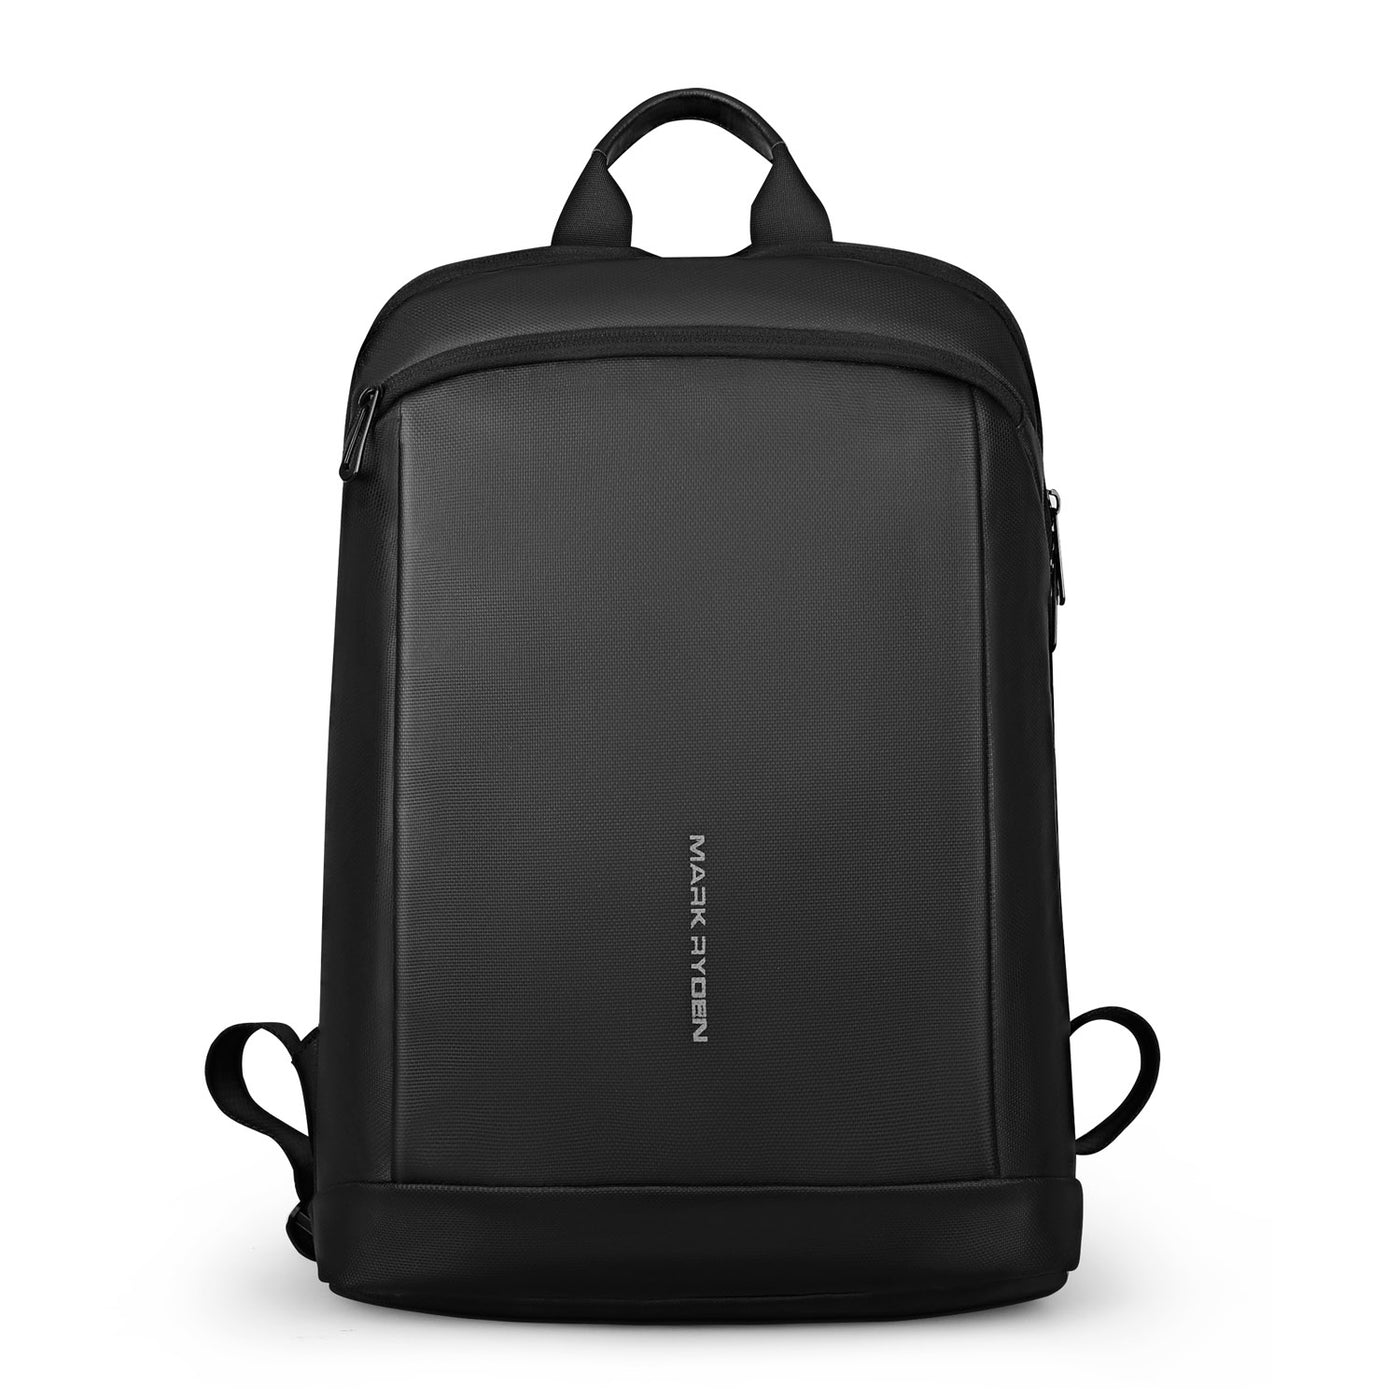 Mark Ryden lightweight and waterproof USB charging backpack. 